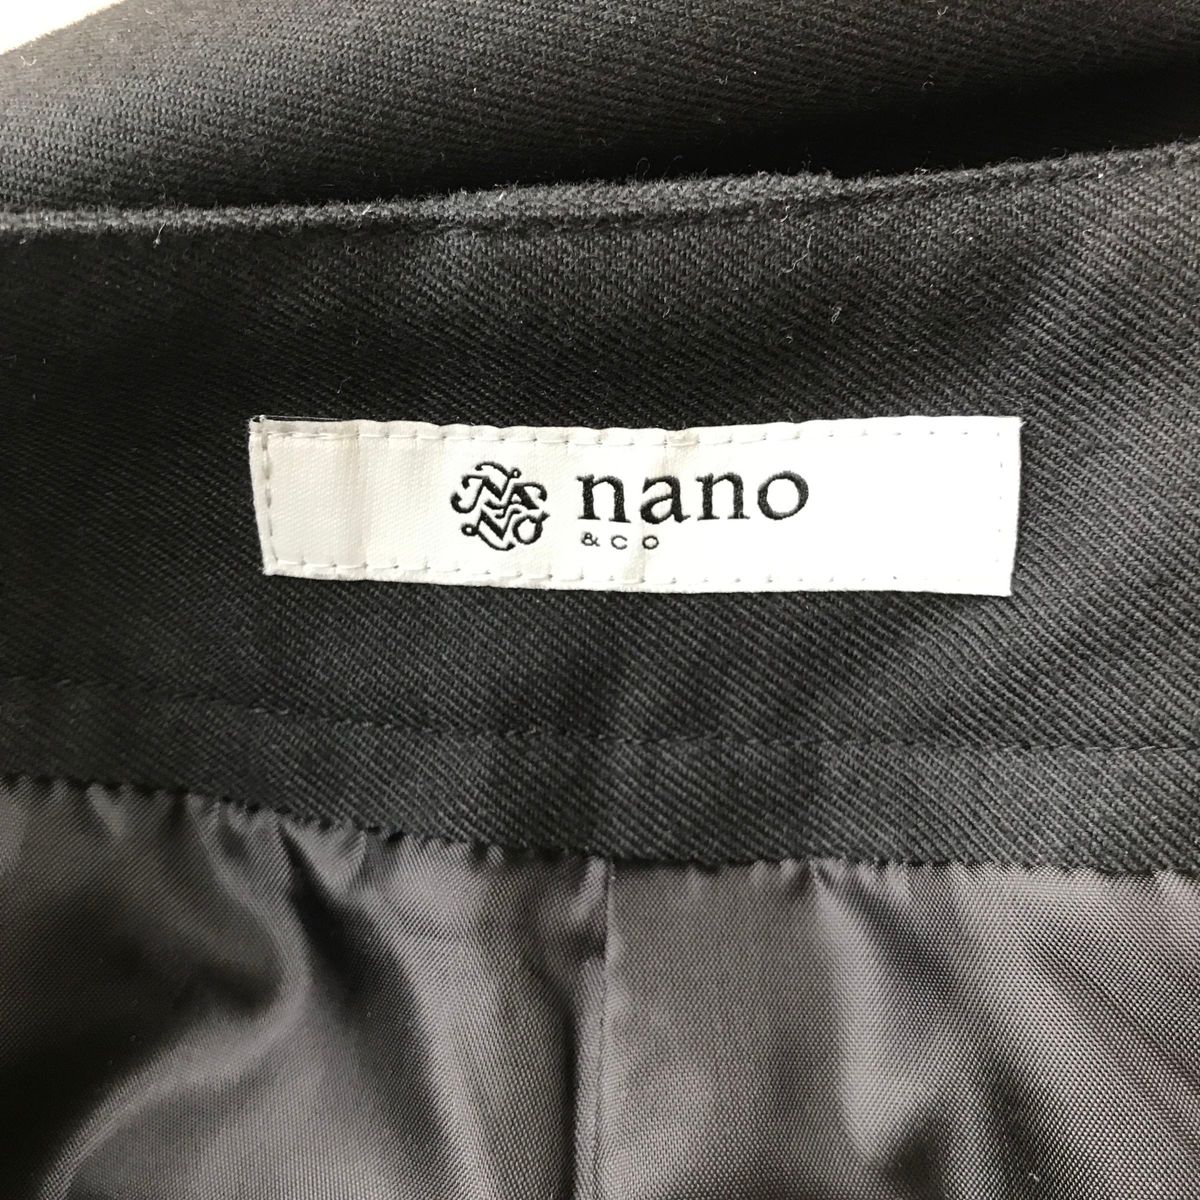 nano universe ワイドパンツ ブラック